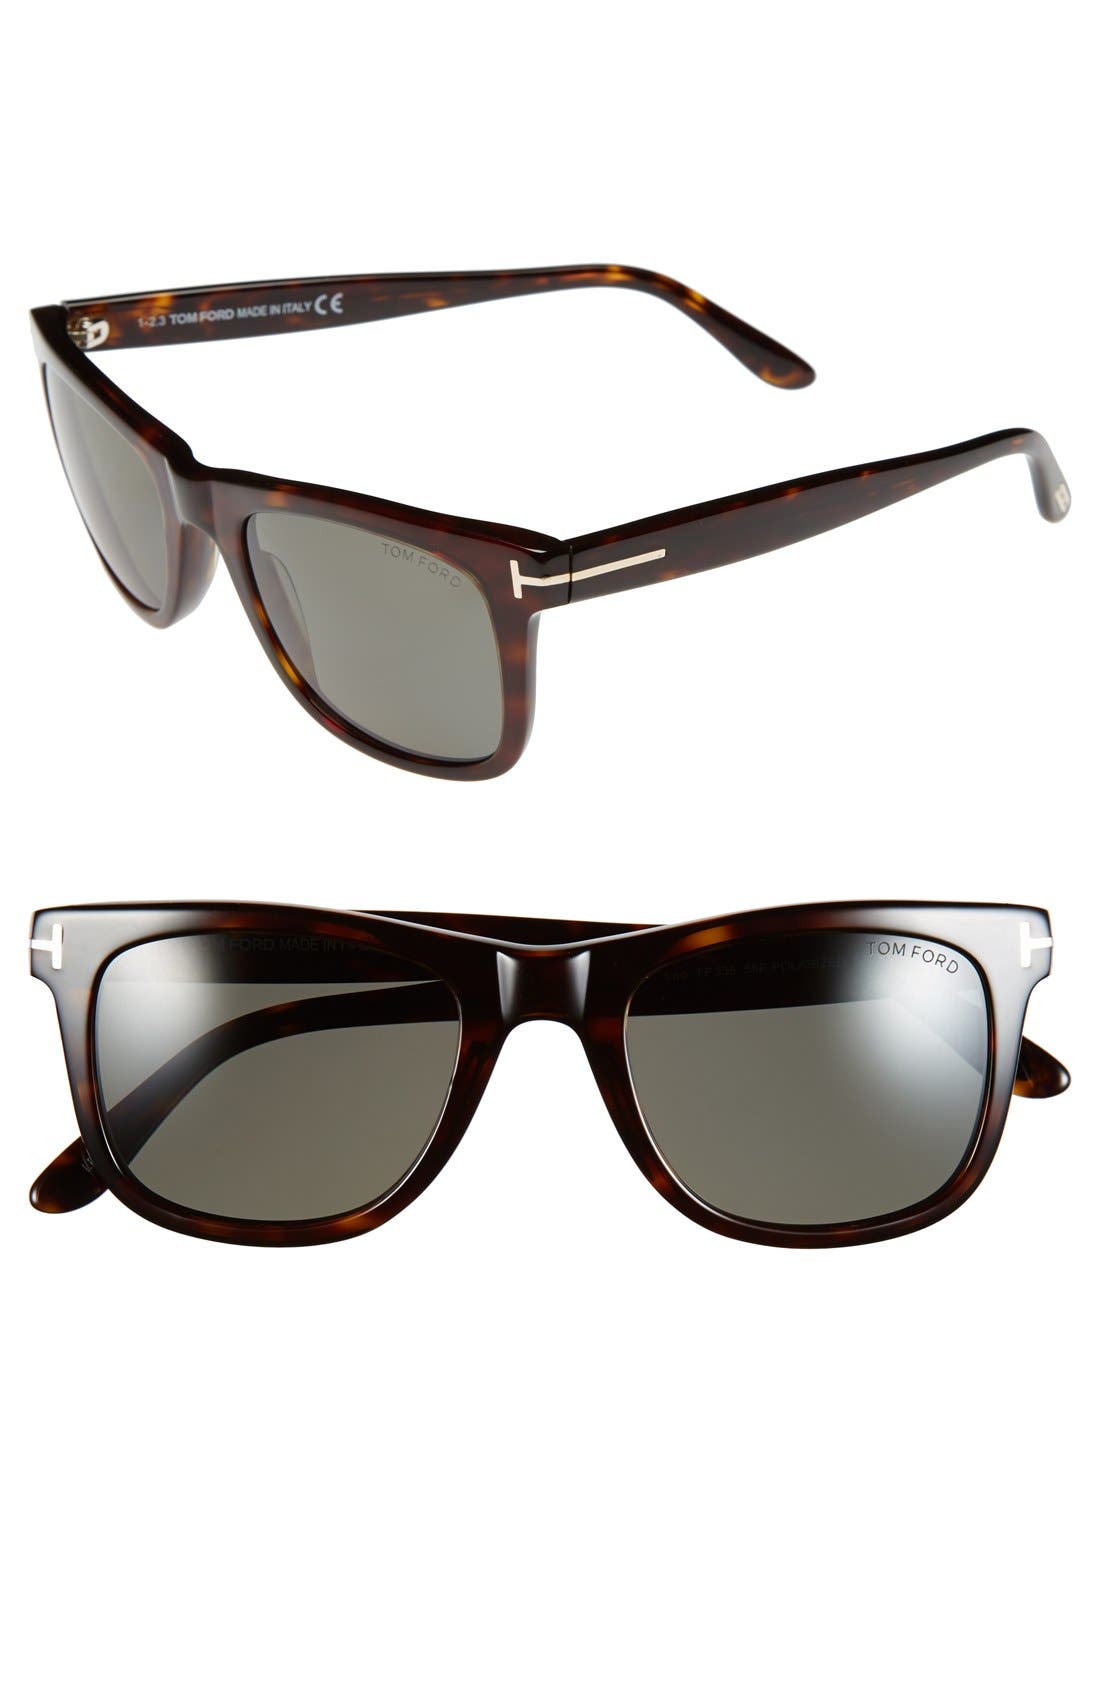 Brand New Authentic Tom Ford Sunglasses TF 336 55N Leo Tortoise Black TF336 